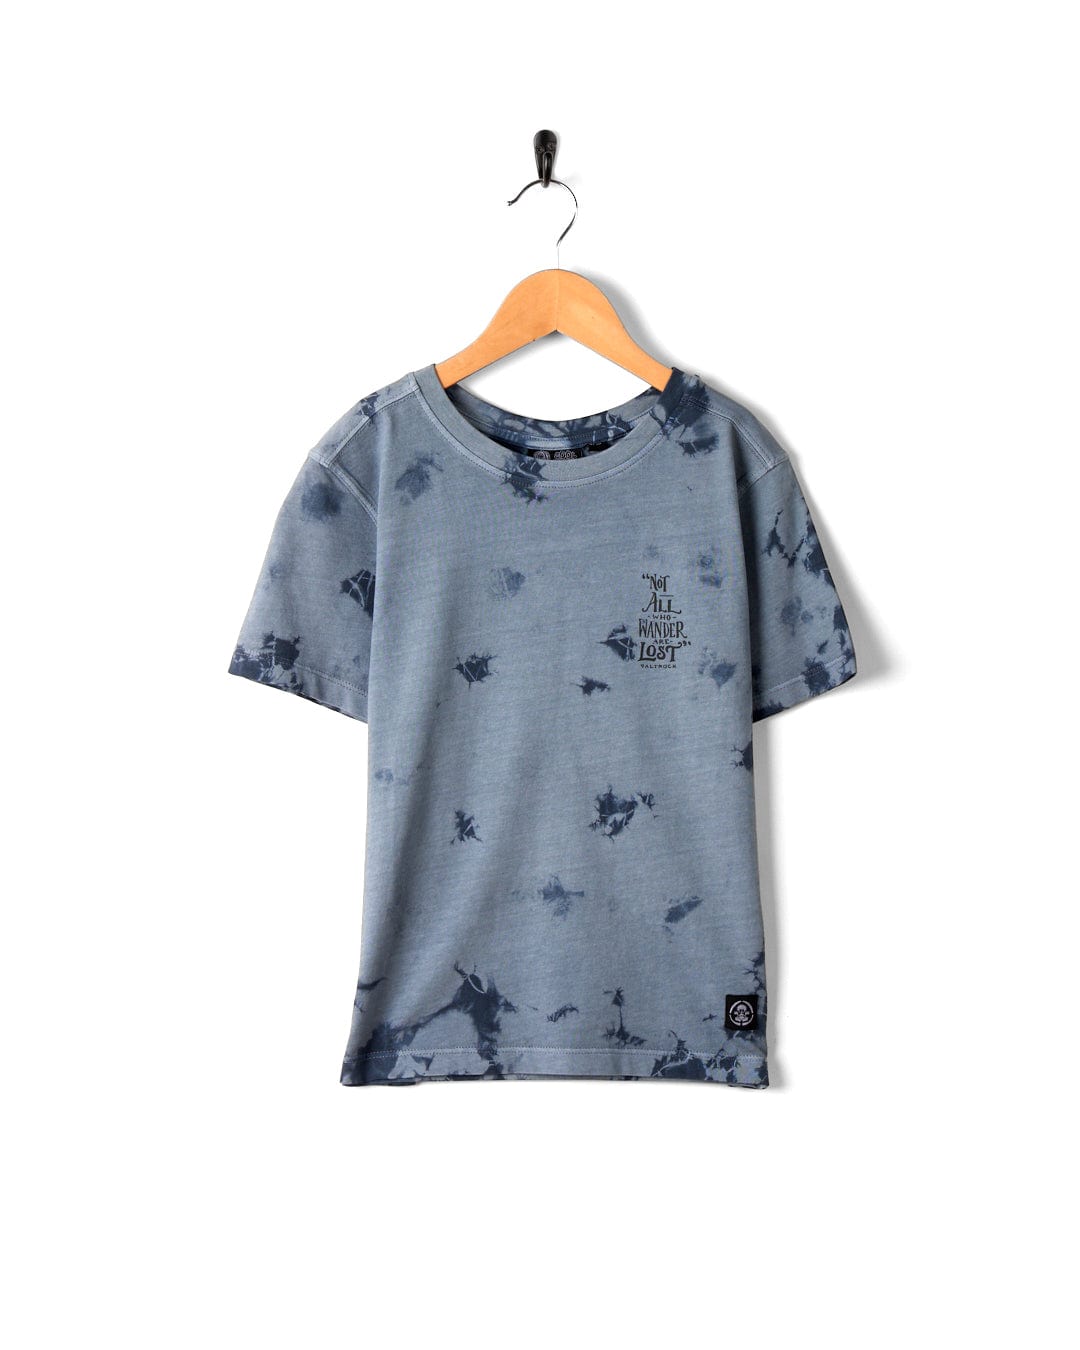 A Lost Ships - Kids Short Sleeve T-Shirt - Blue Tie Dye with Saltrock branding hanging on a wooden hanger.